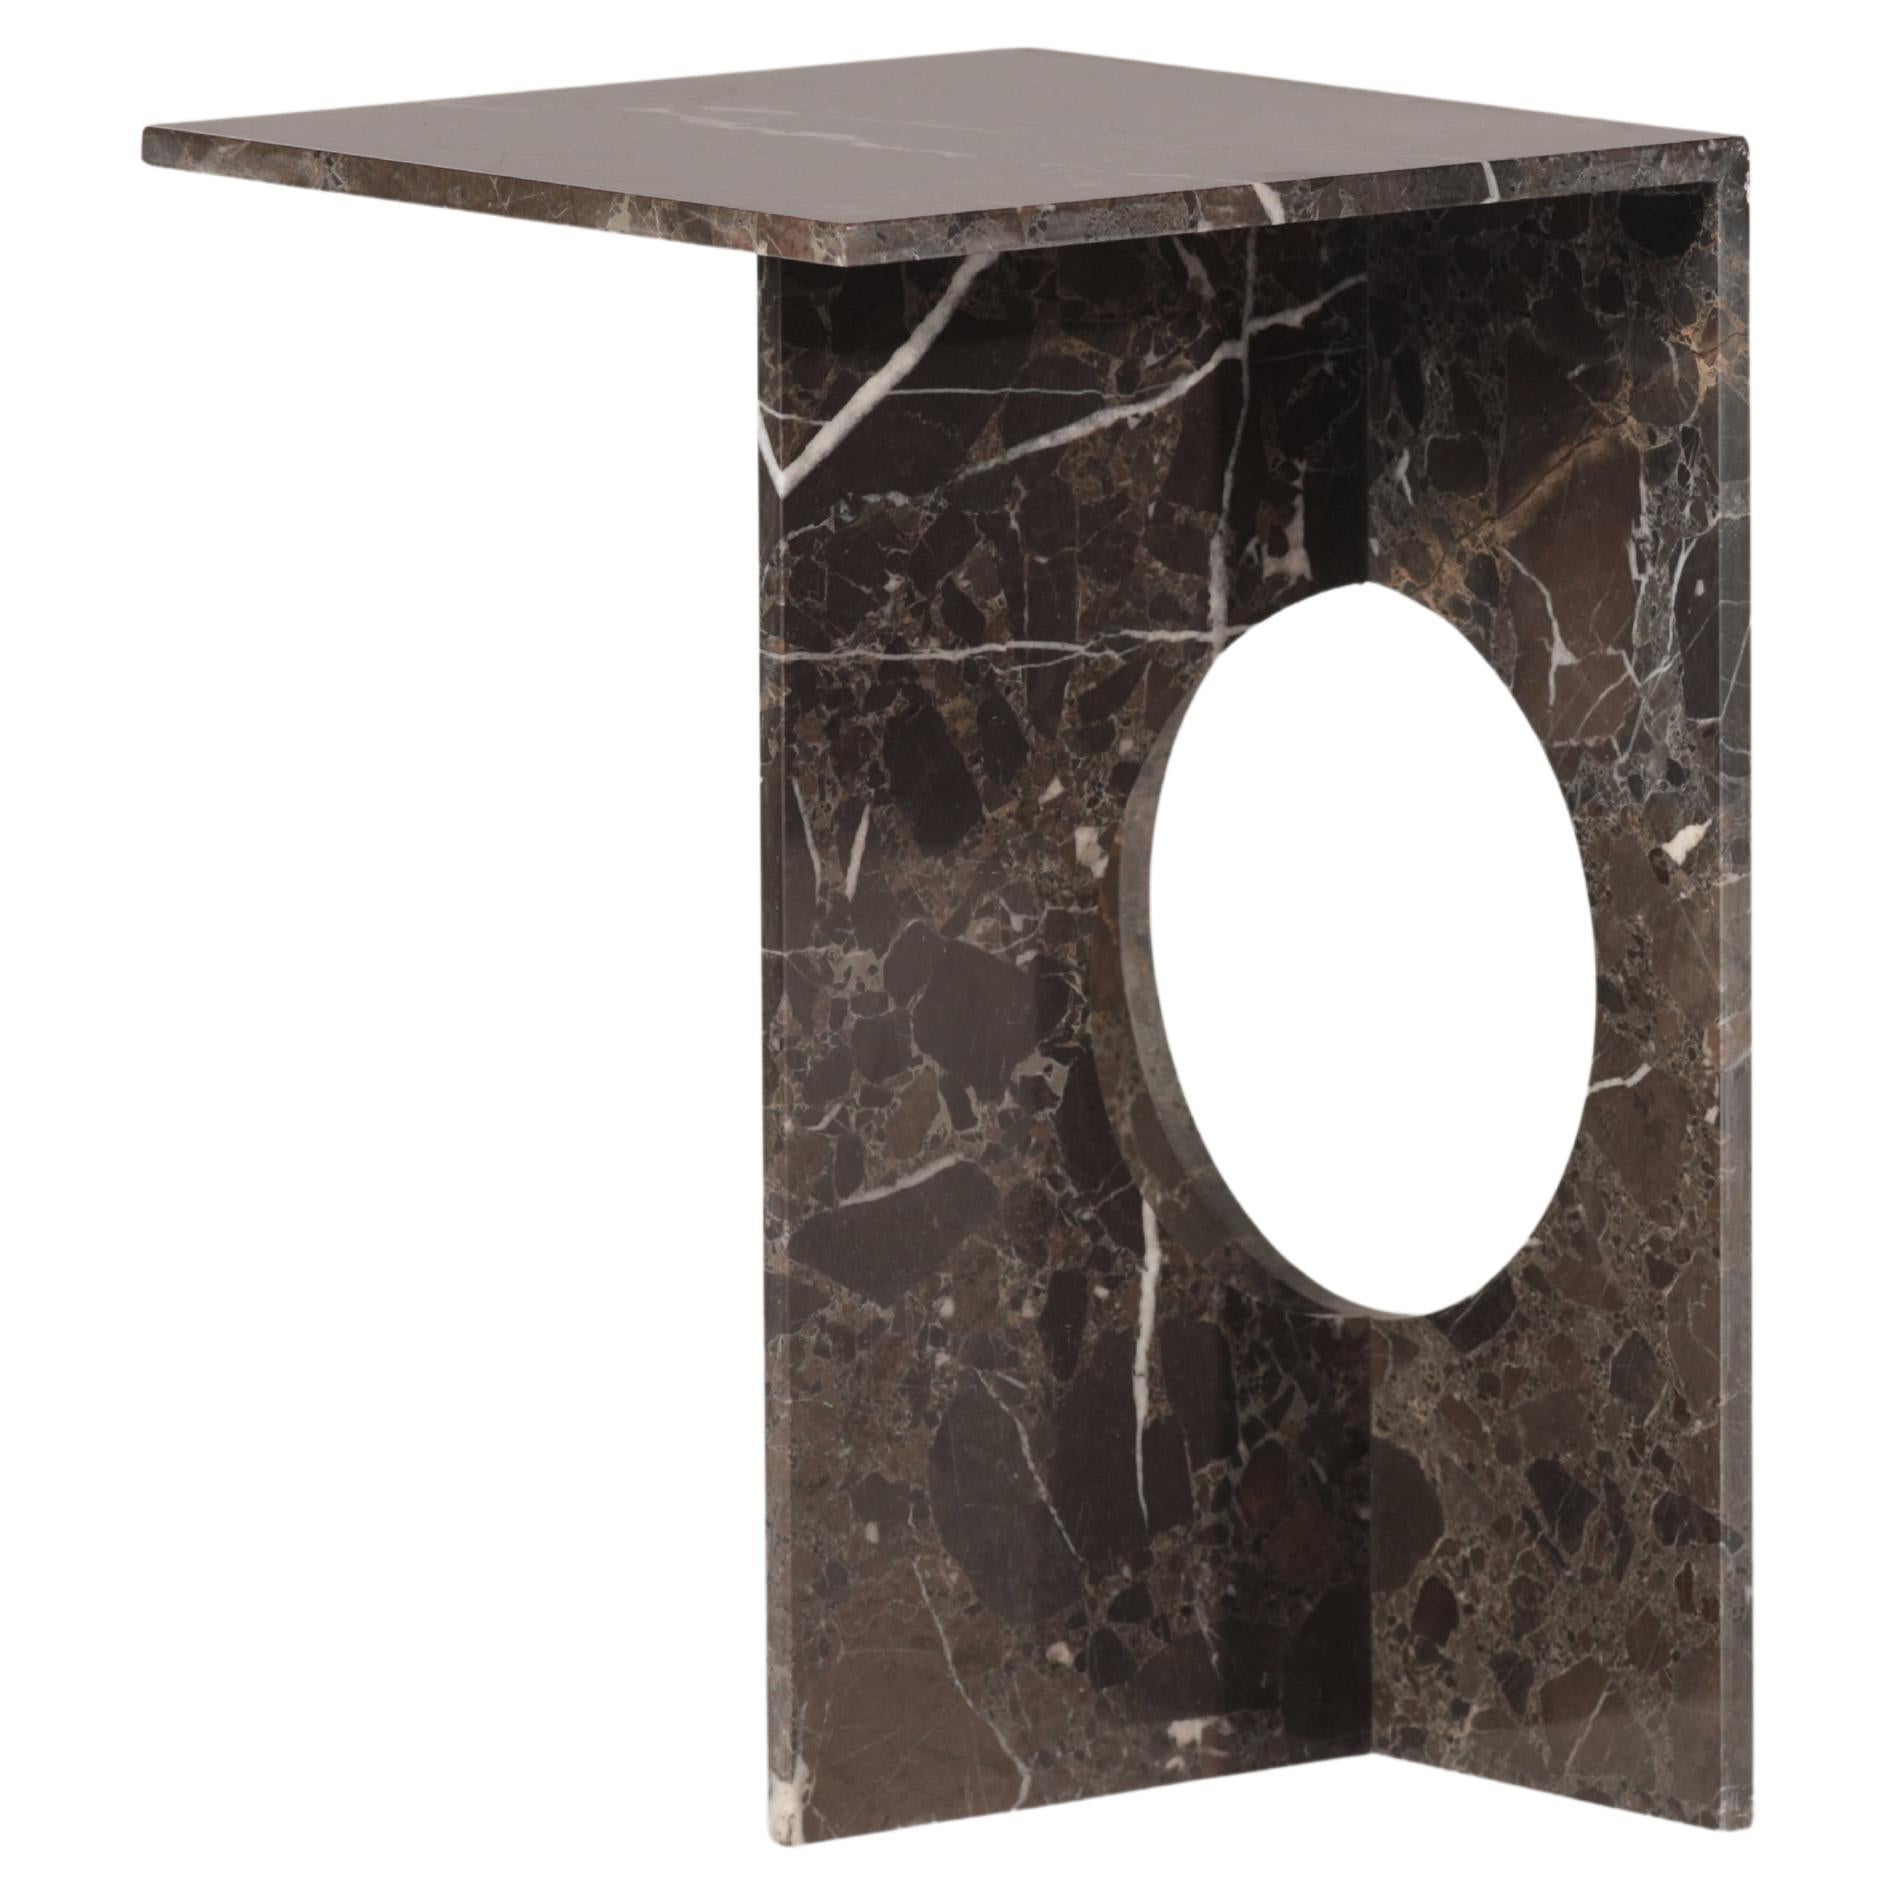 Table d'appoint Ola, marbre noir Toros, Studio Mohs